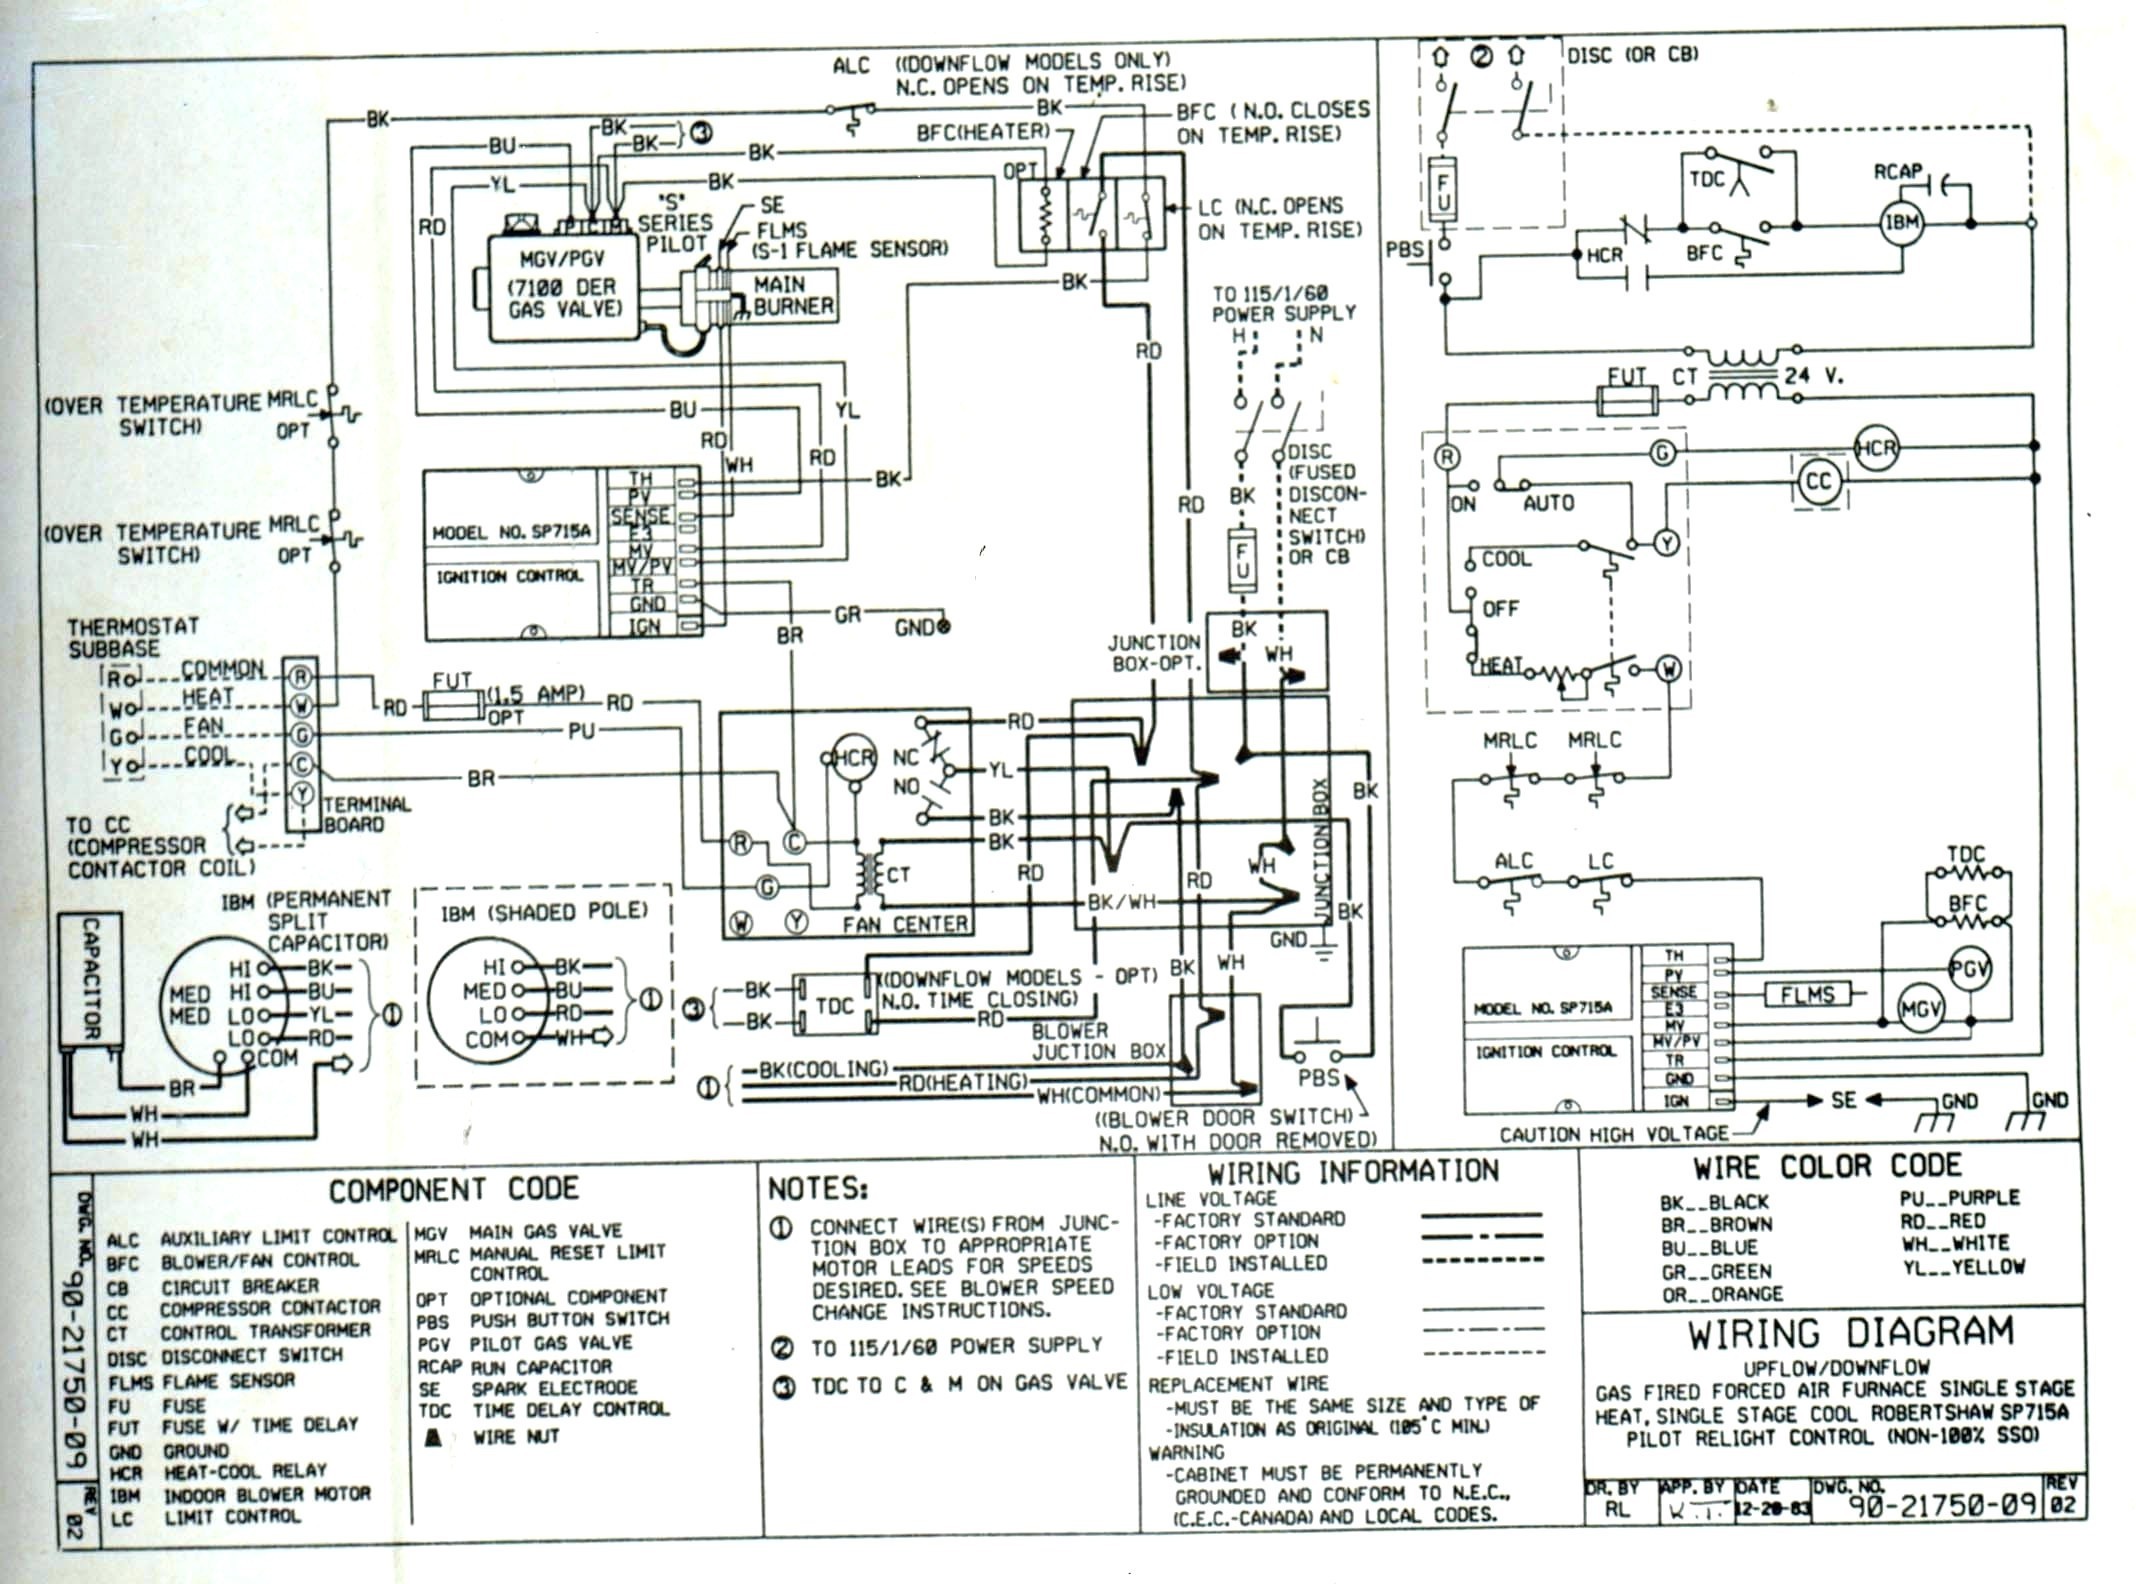 electric heat strip wiring diagram Collection Electric Heat Strip Wiring Diagram Beautiful Goodman Air Handler